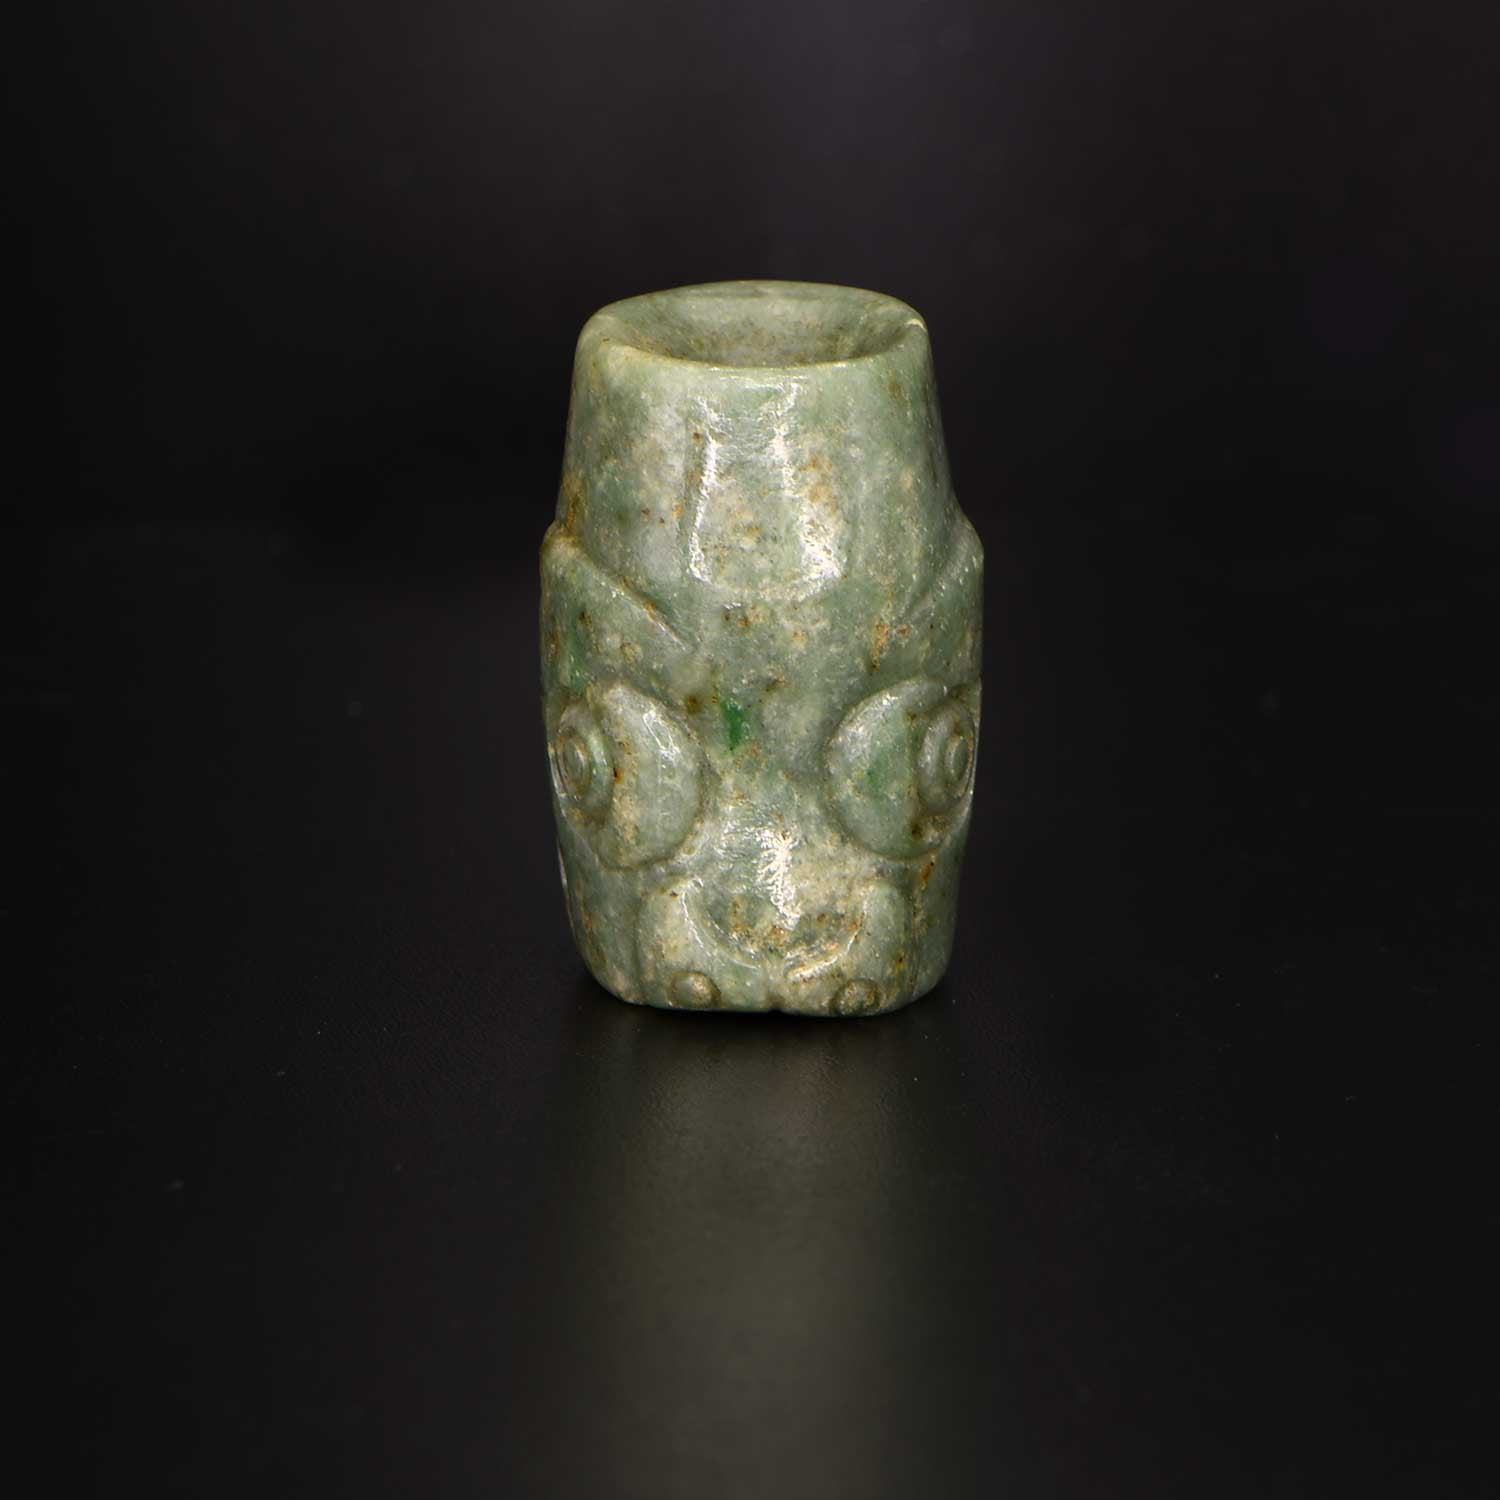 A rare Mixtec Serpent Head Jade Bead, ca. 13th - 15th century CE